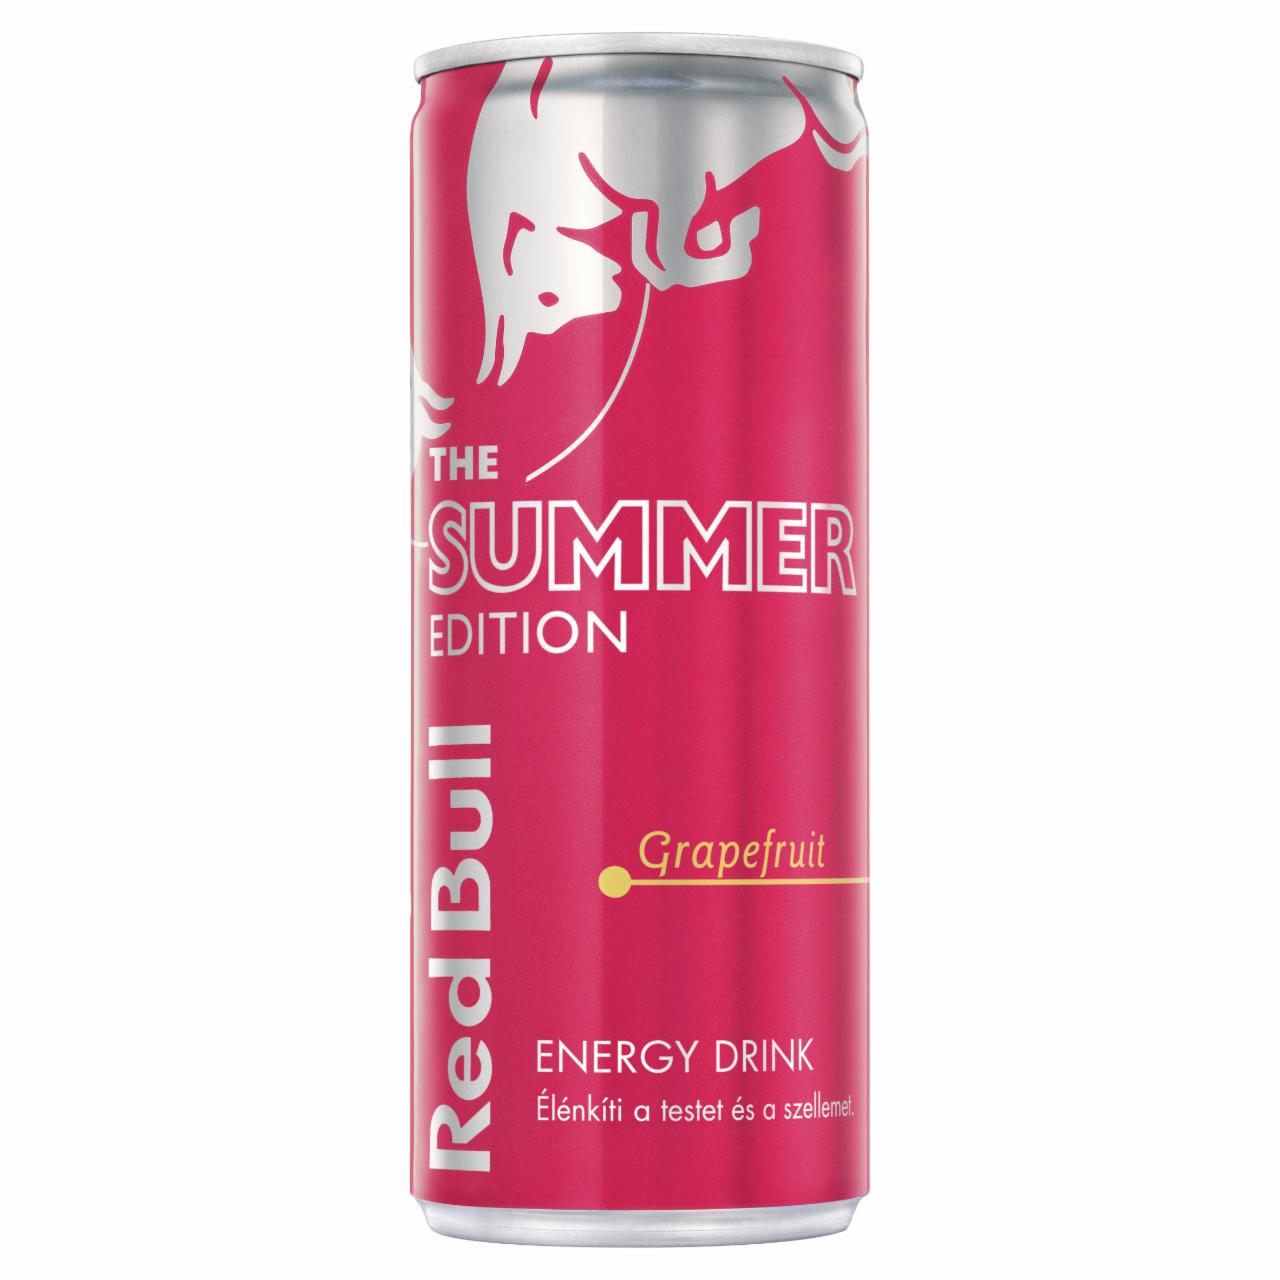 Képek - Red Bull The Summer Edition koffein és arginin tartalmú ital grapefruit ízesítéssel 250 ml